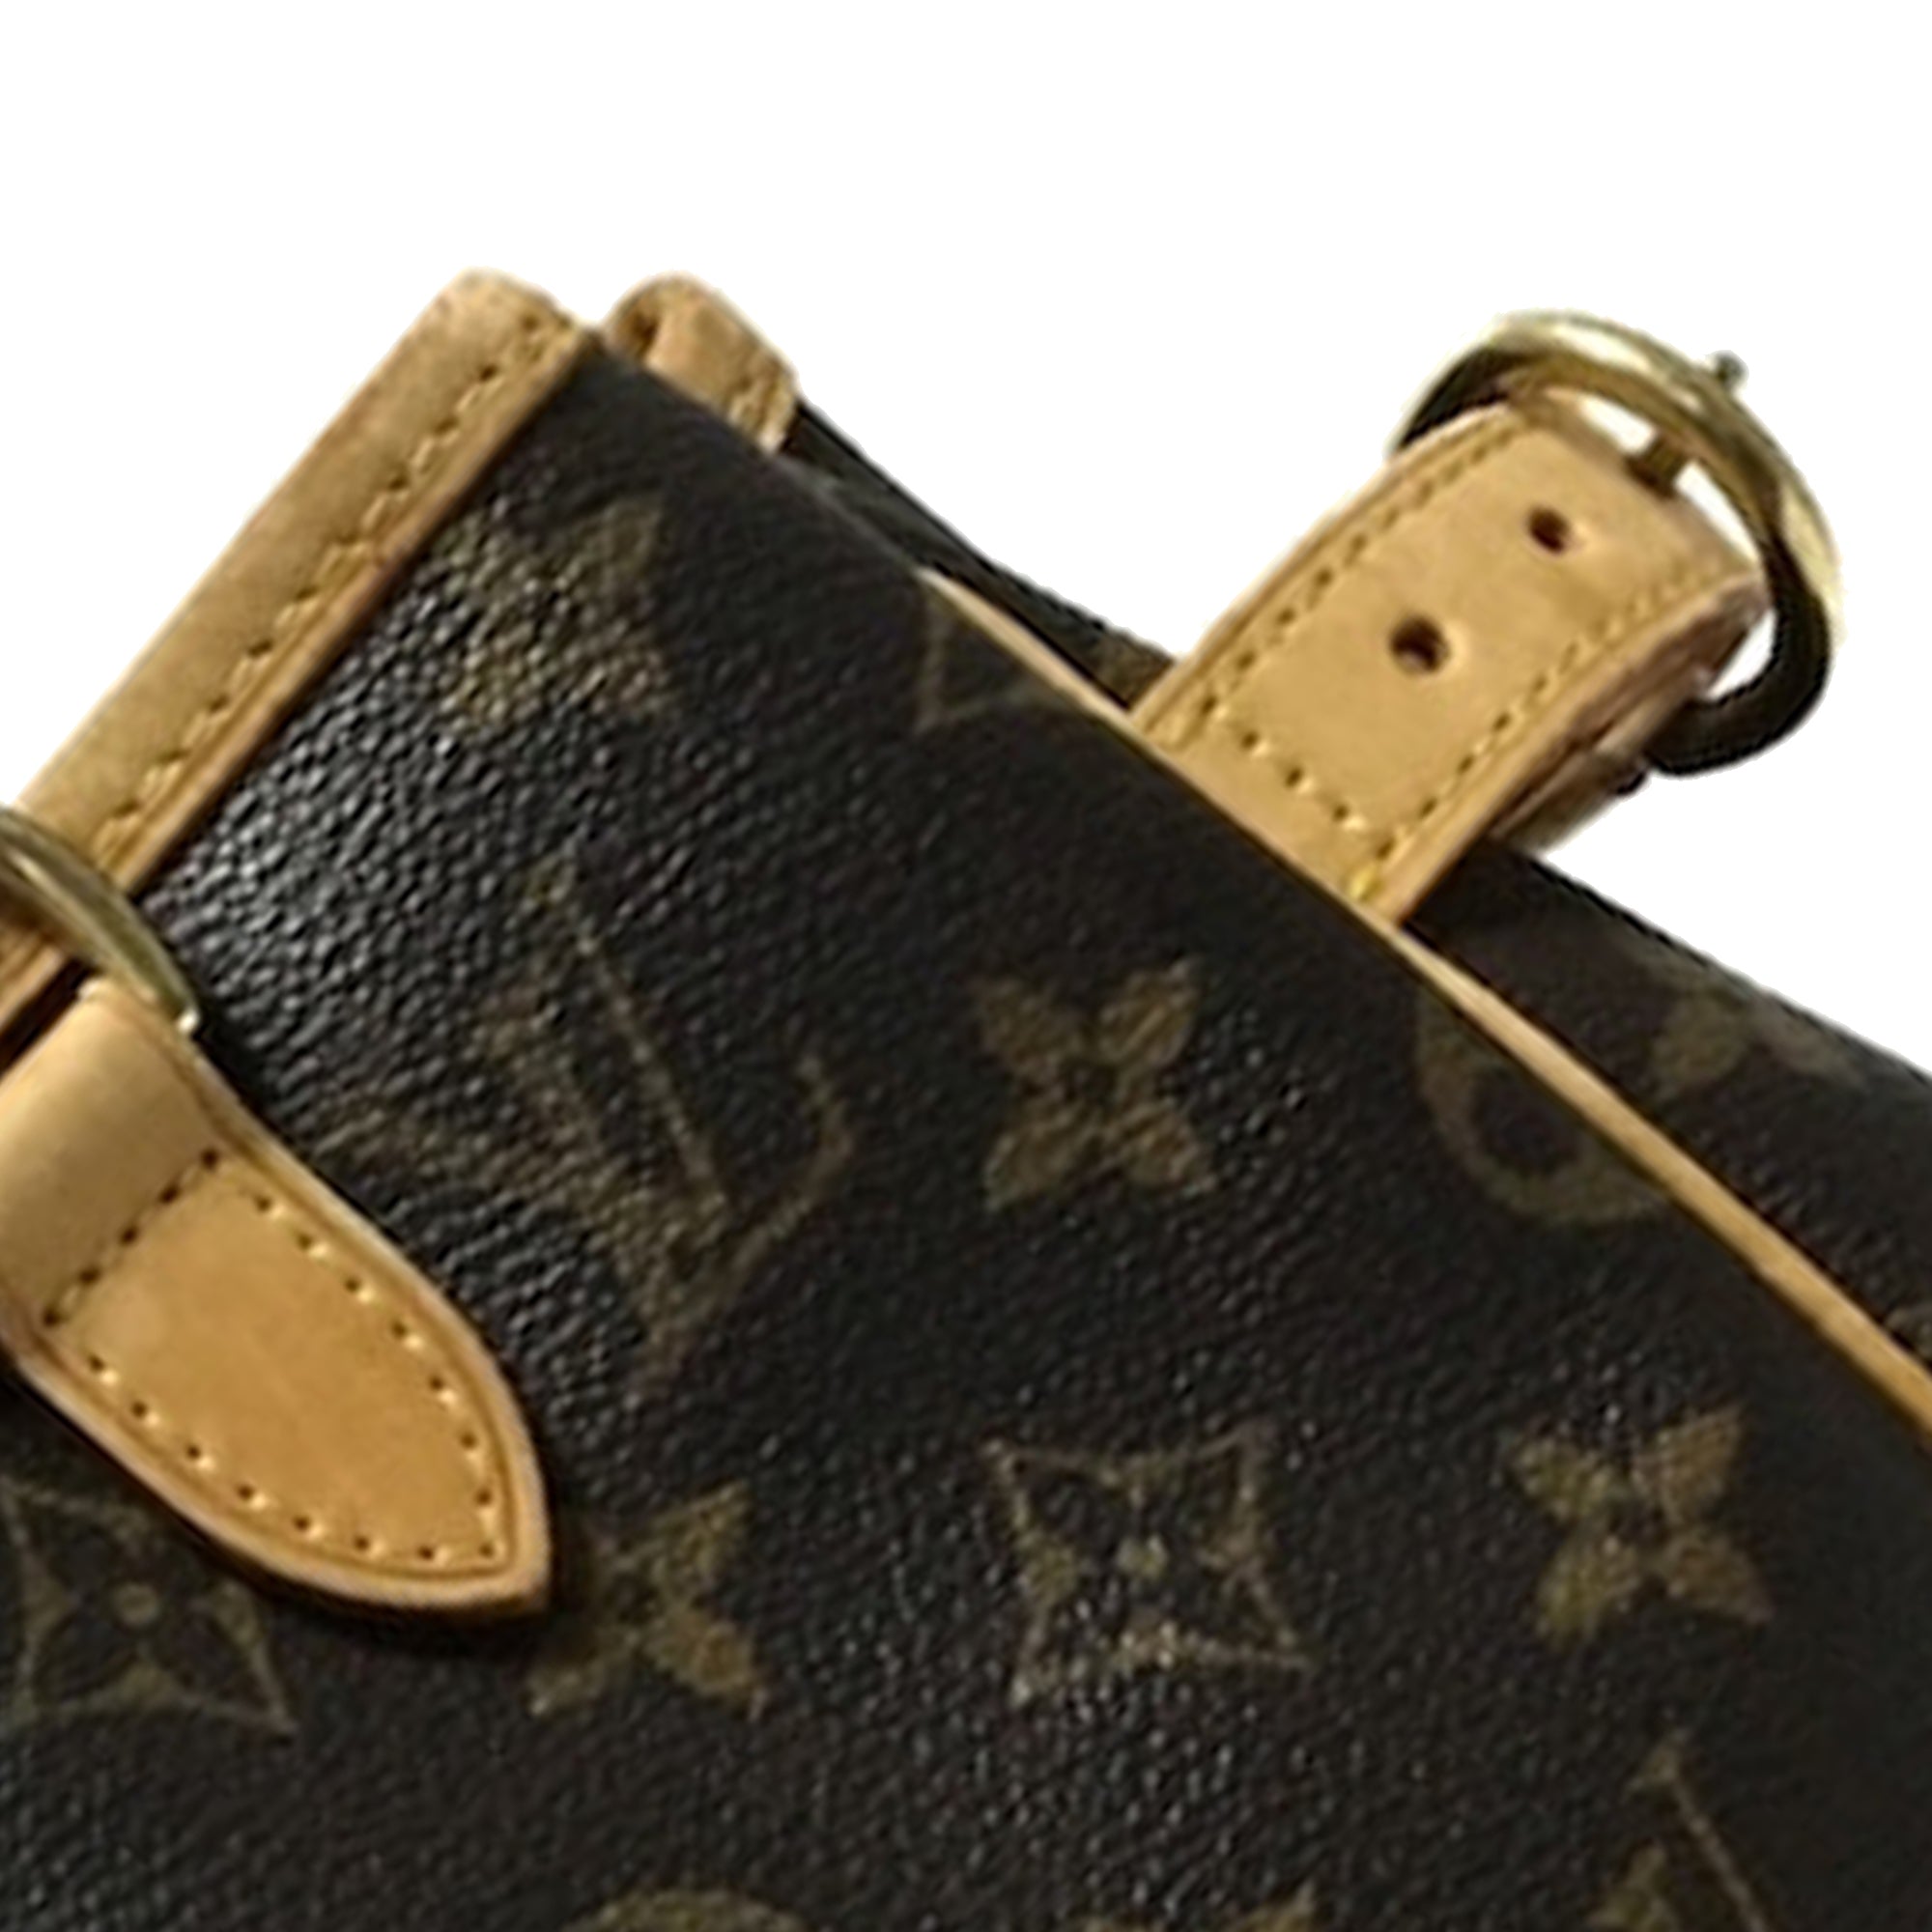 Louis Vuitton Monogram Batignolles Vertical PM Handbag